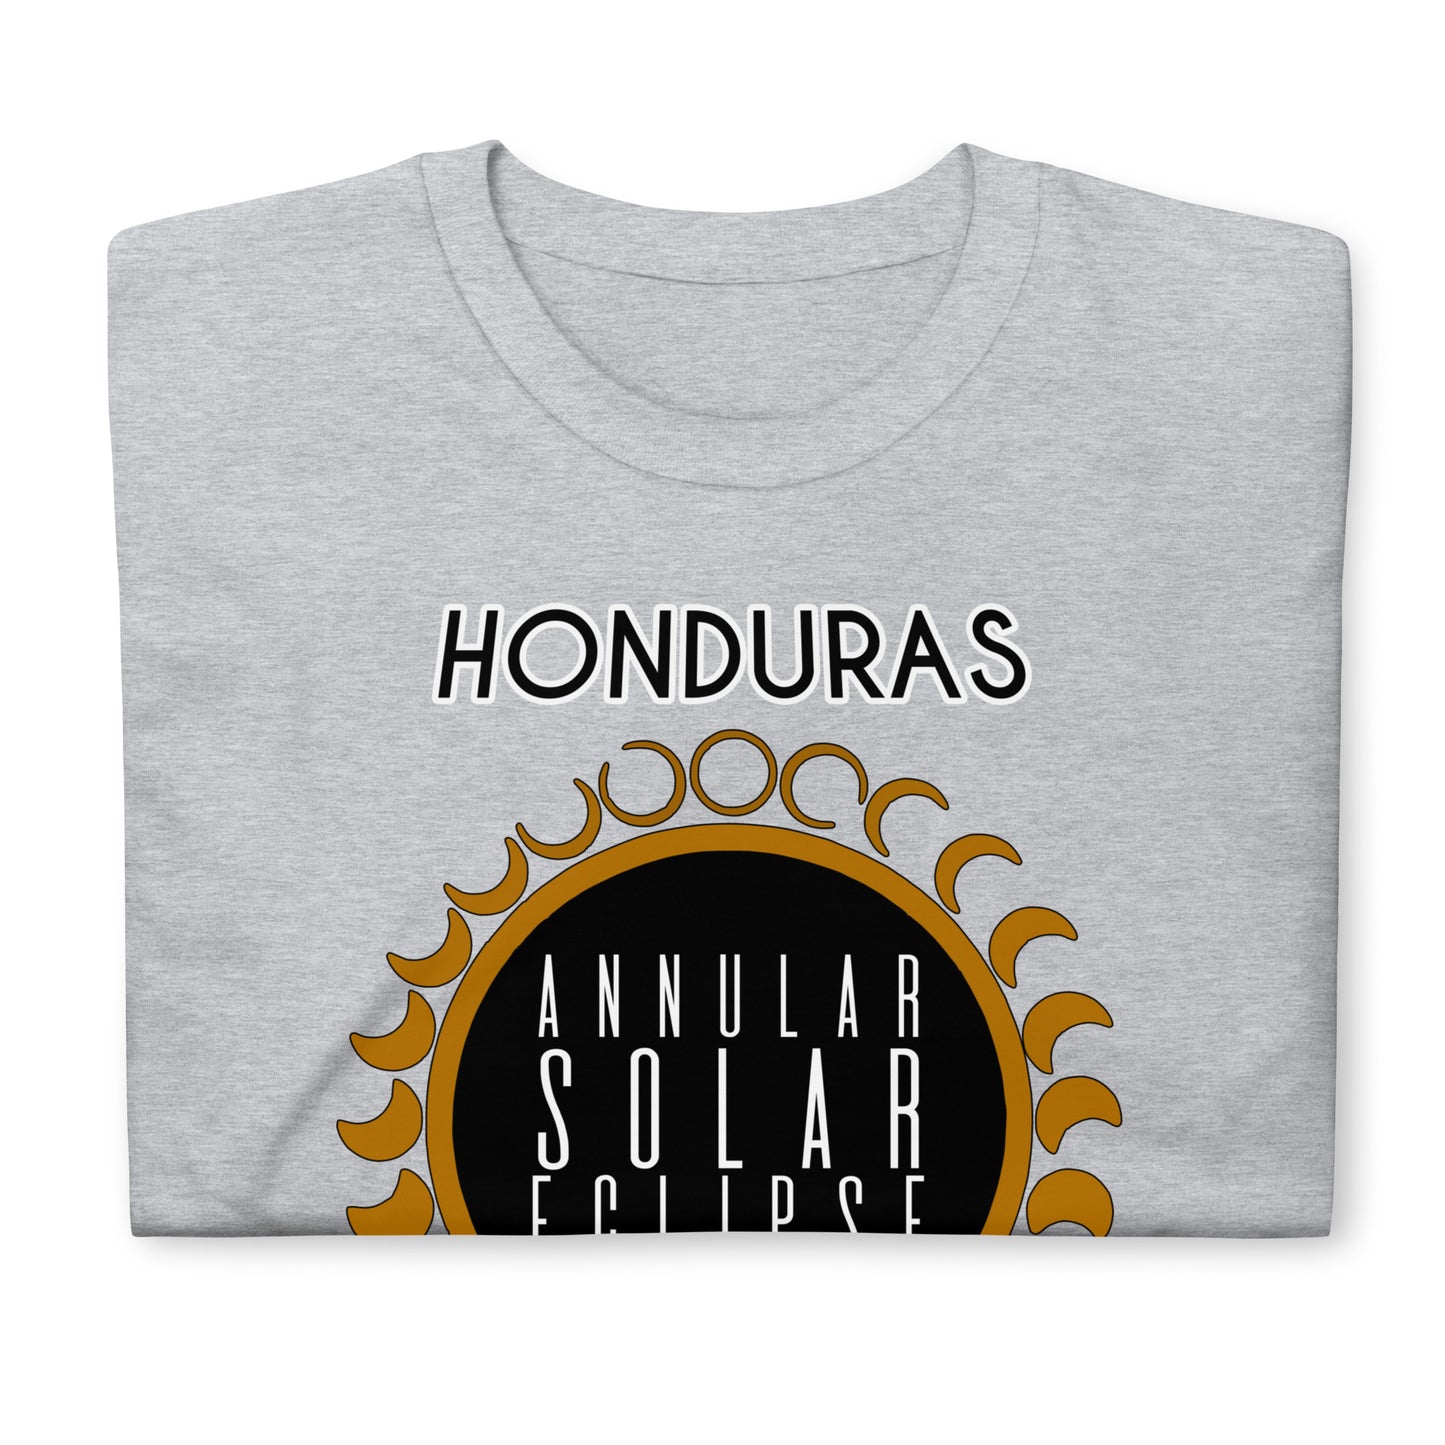 Annular Solar Eclipse - Honduras - Black Sun